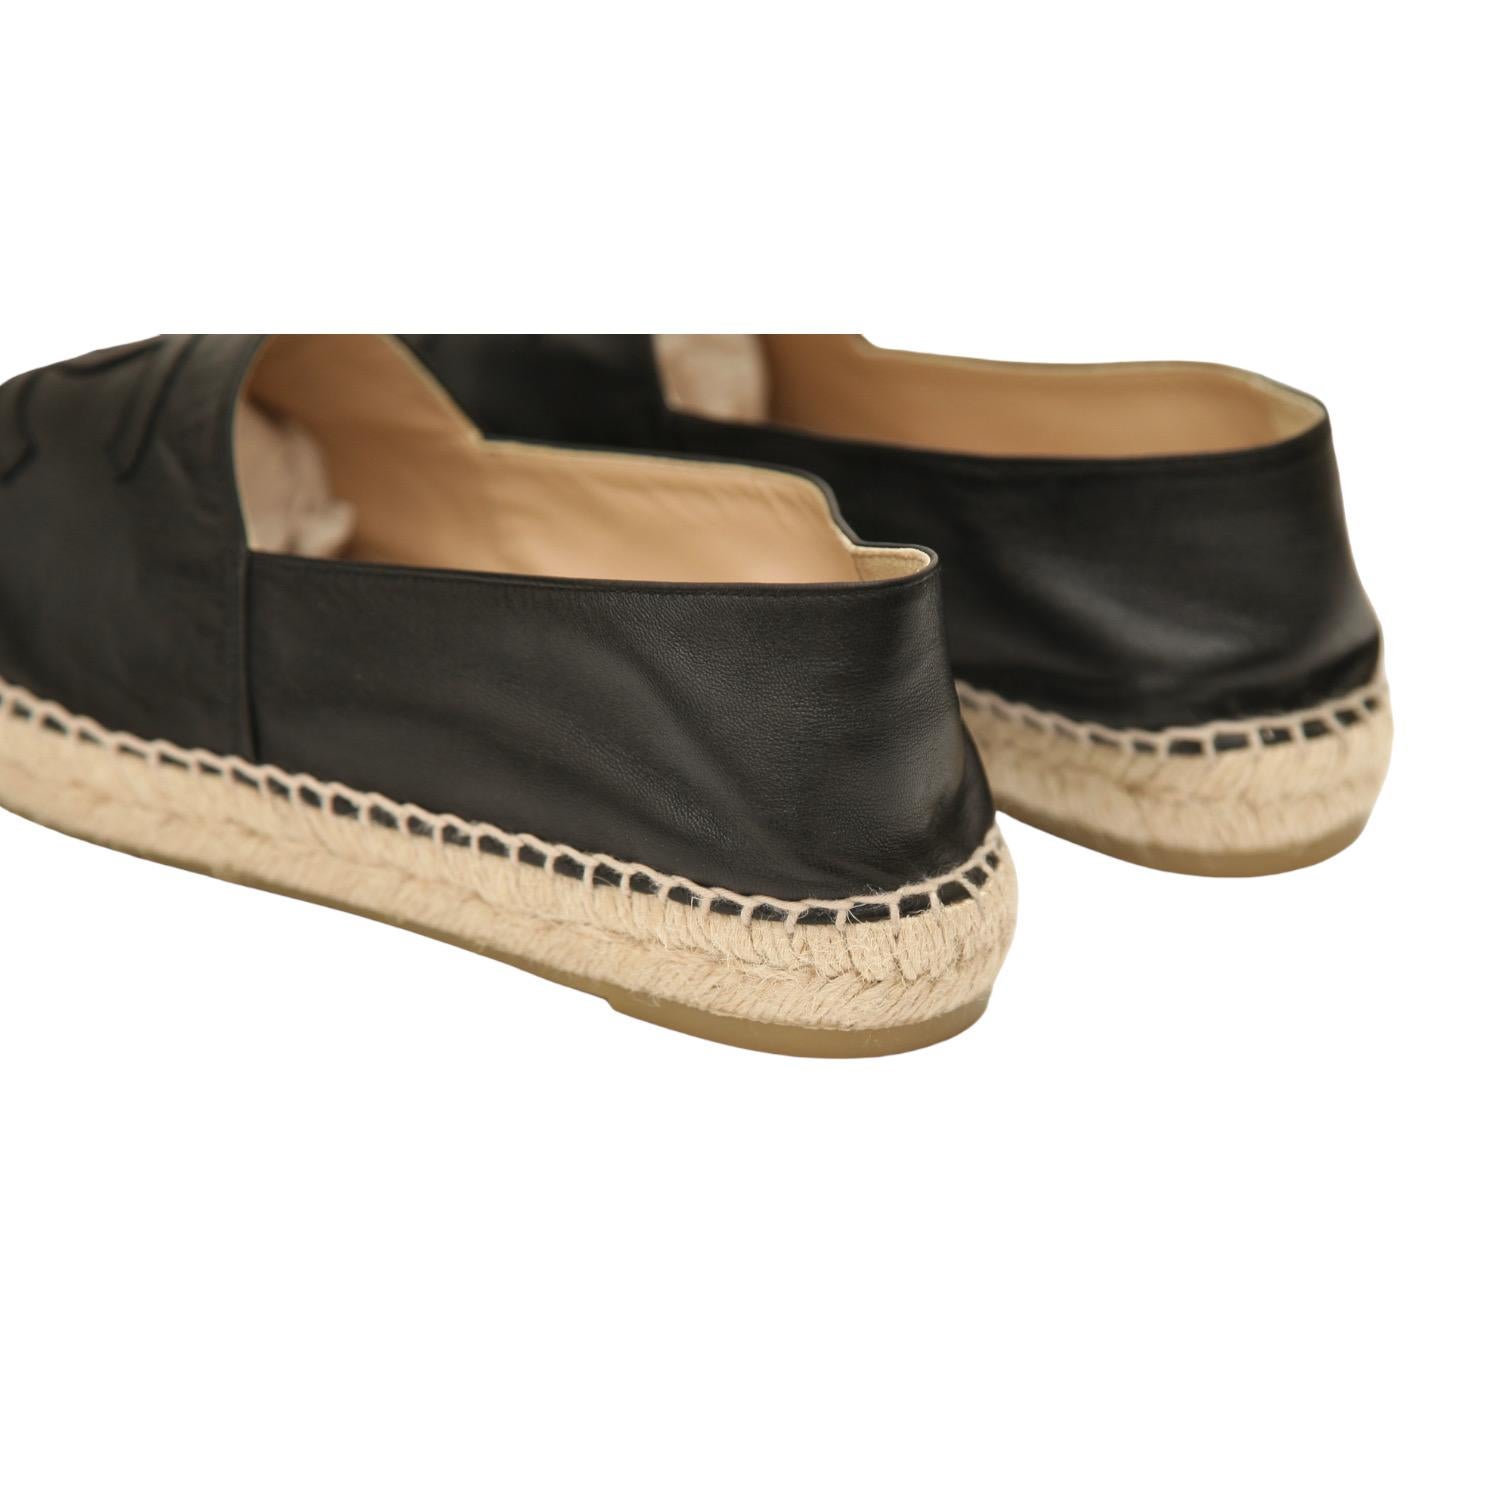 CHANEL Black Lambskin Leather Espadrilles Loafers Flats Cap Toe CC Shoes Sz 40 4